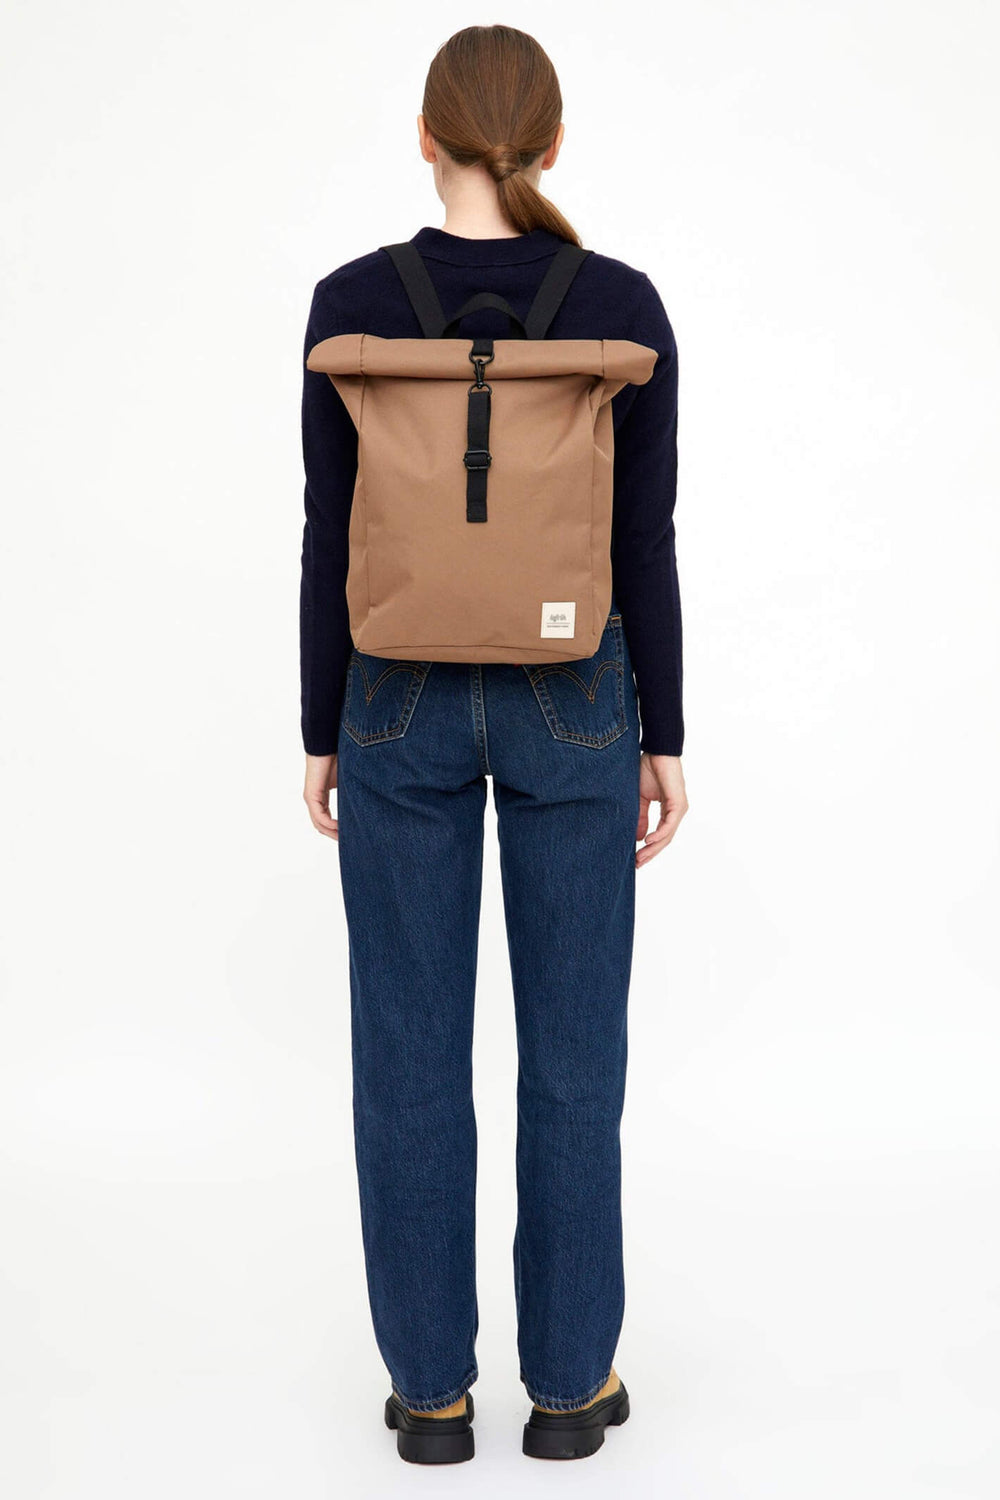 Lefrik Roll Mini Camel Backpack Bag - Shirley Allum Boutique